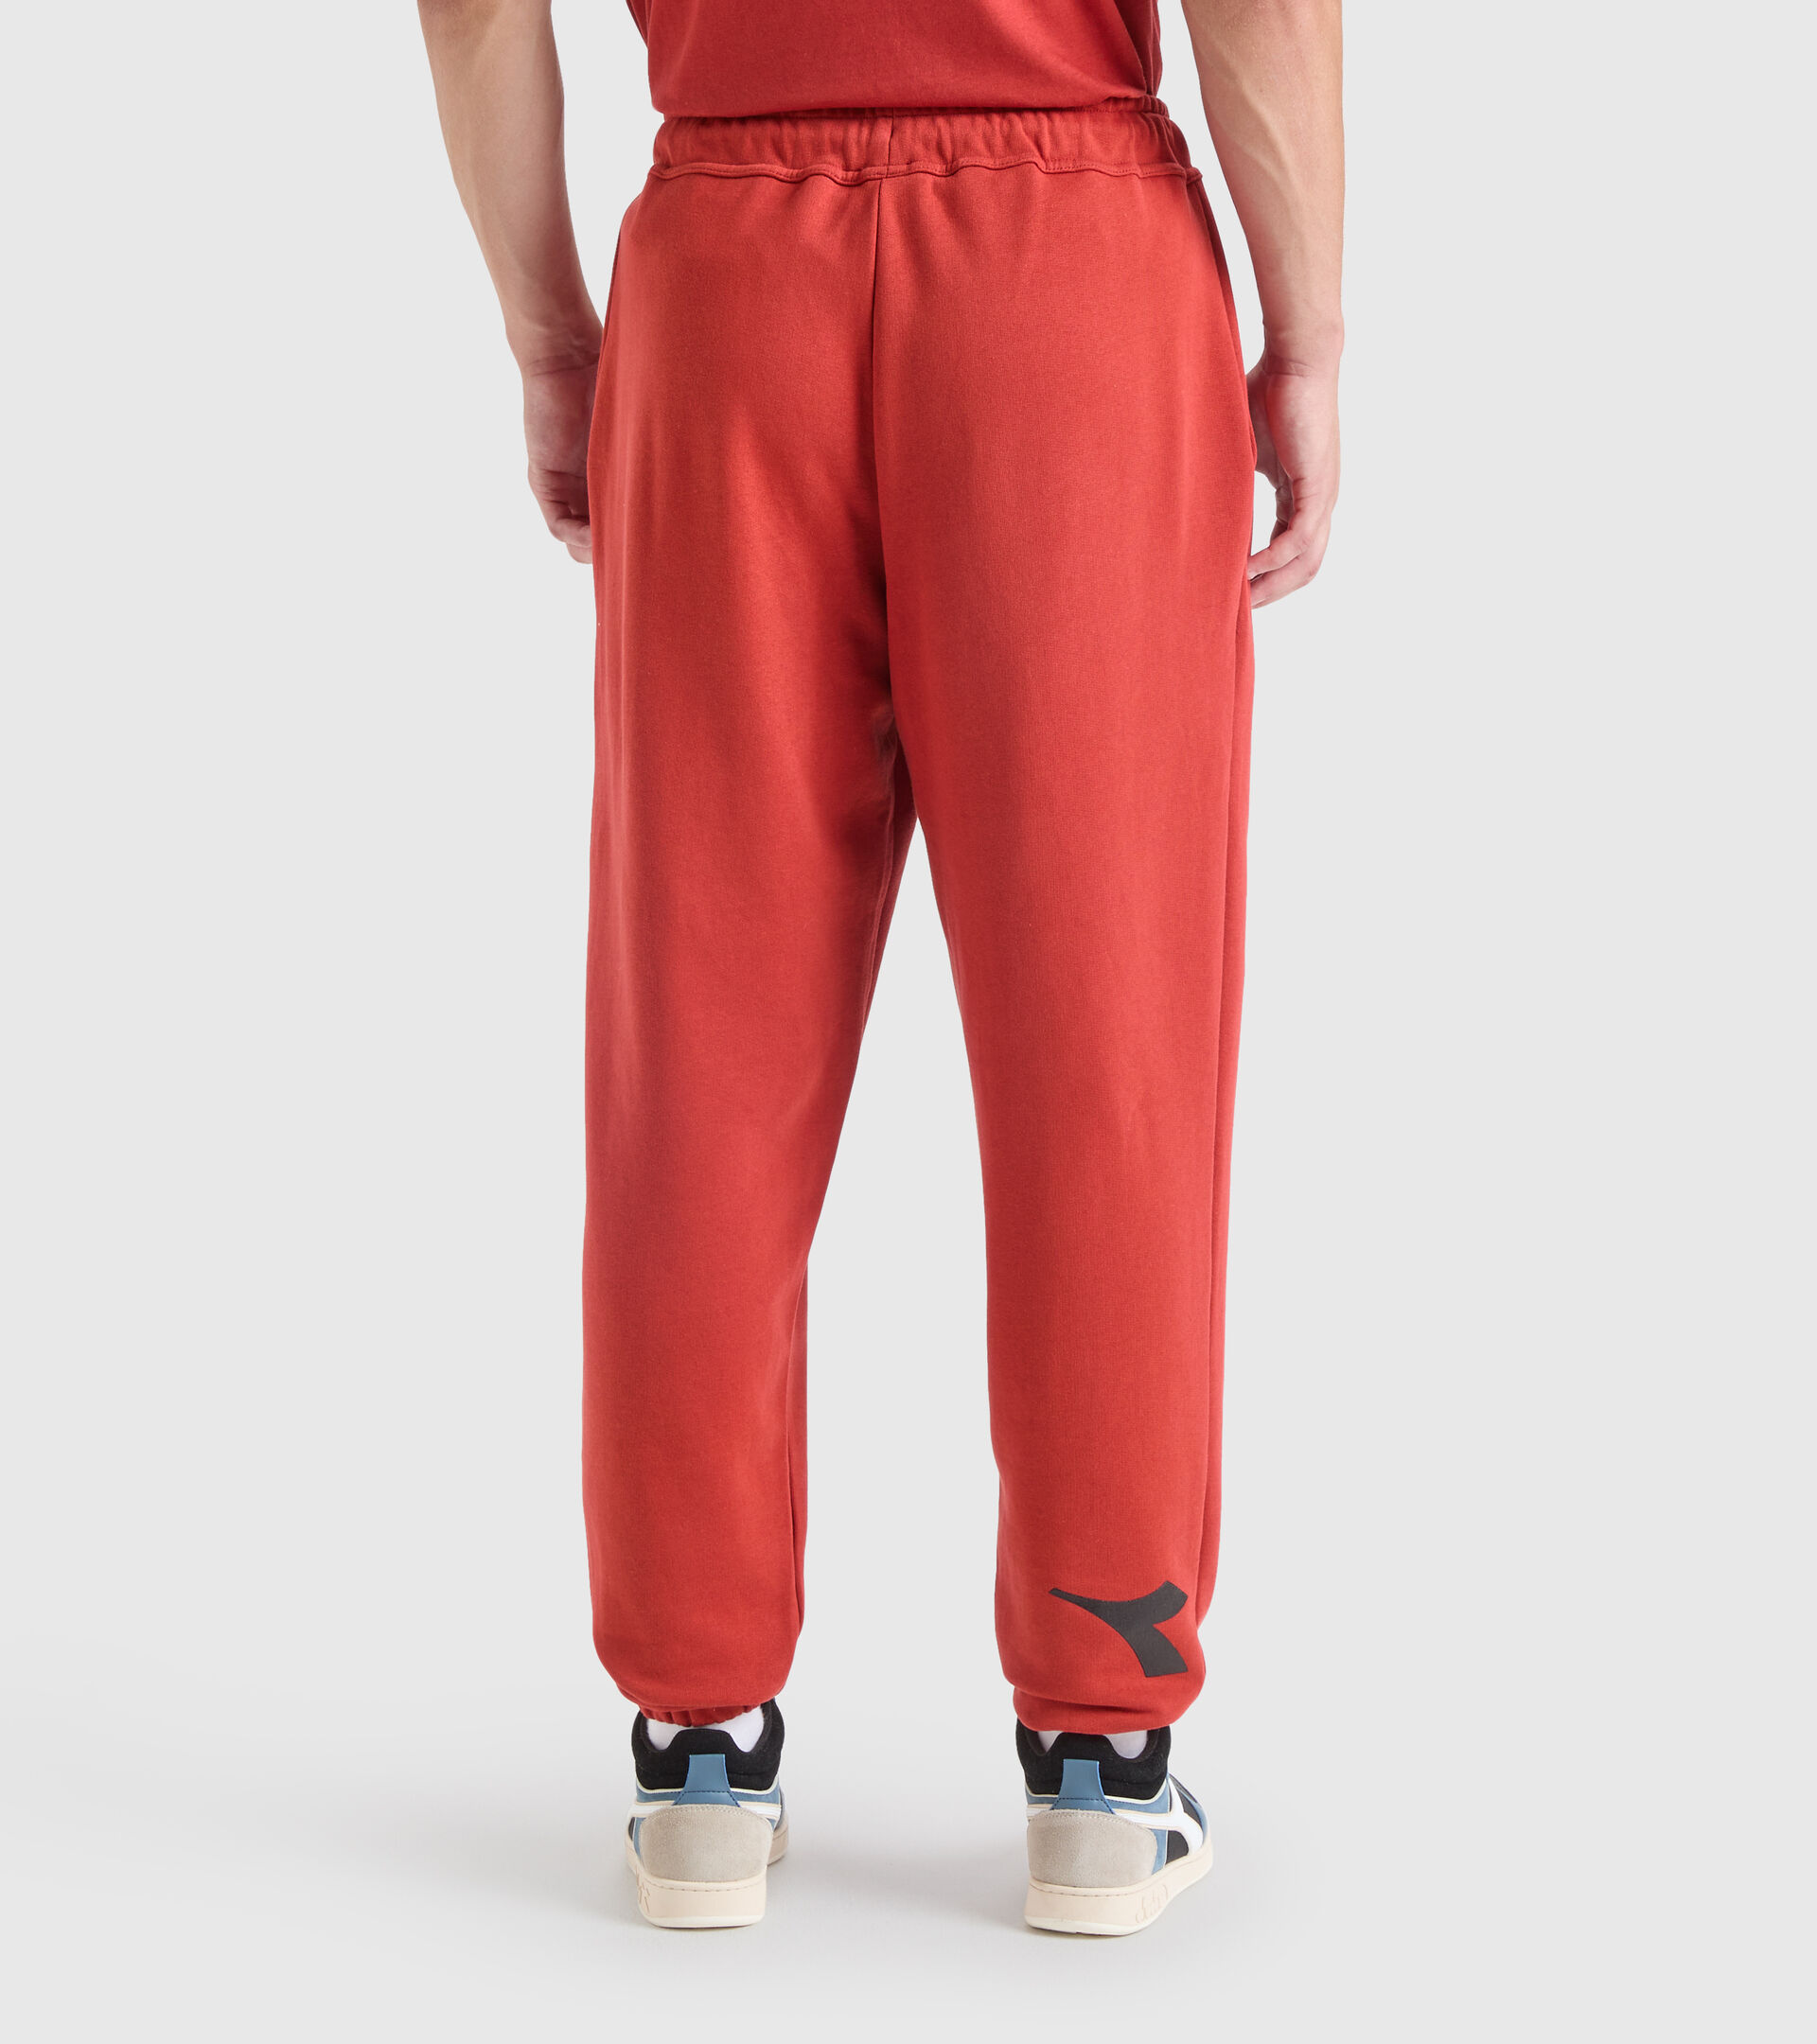 Cotton sports trousers - Unisex PANT MANIFESTO BROWN PURPLE - Diadora